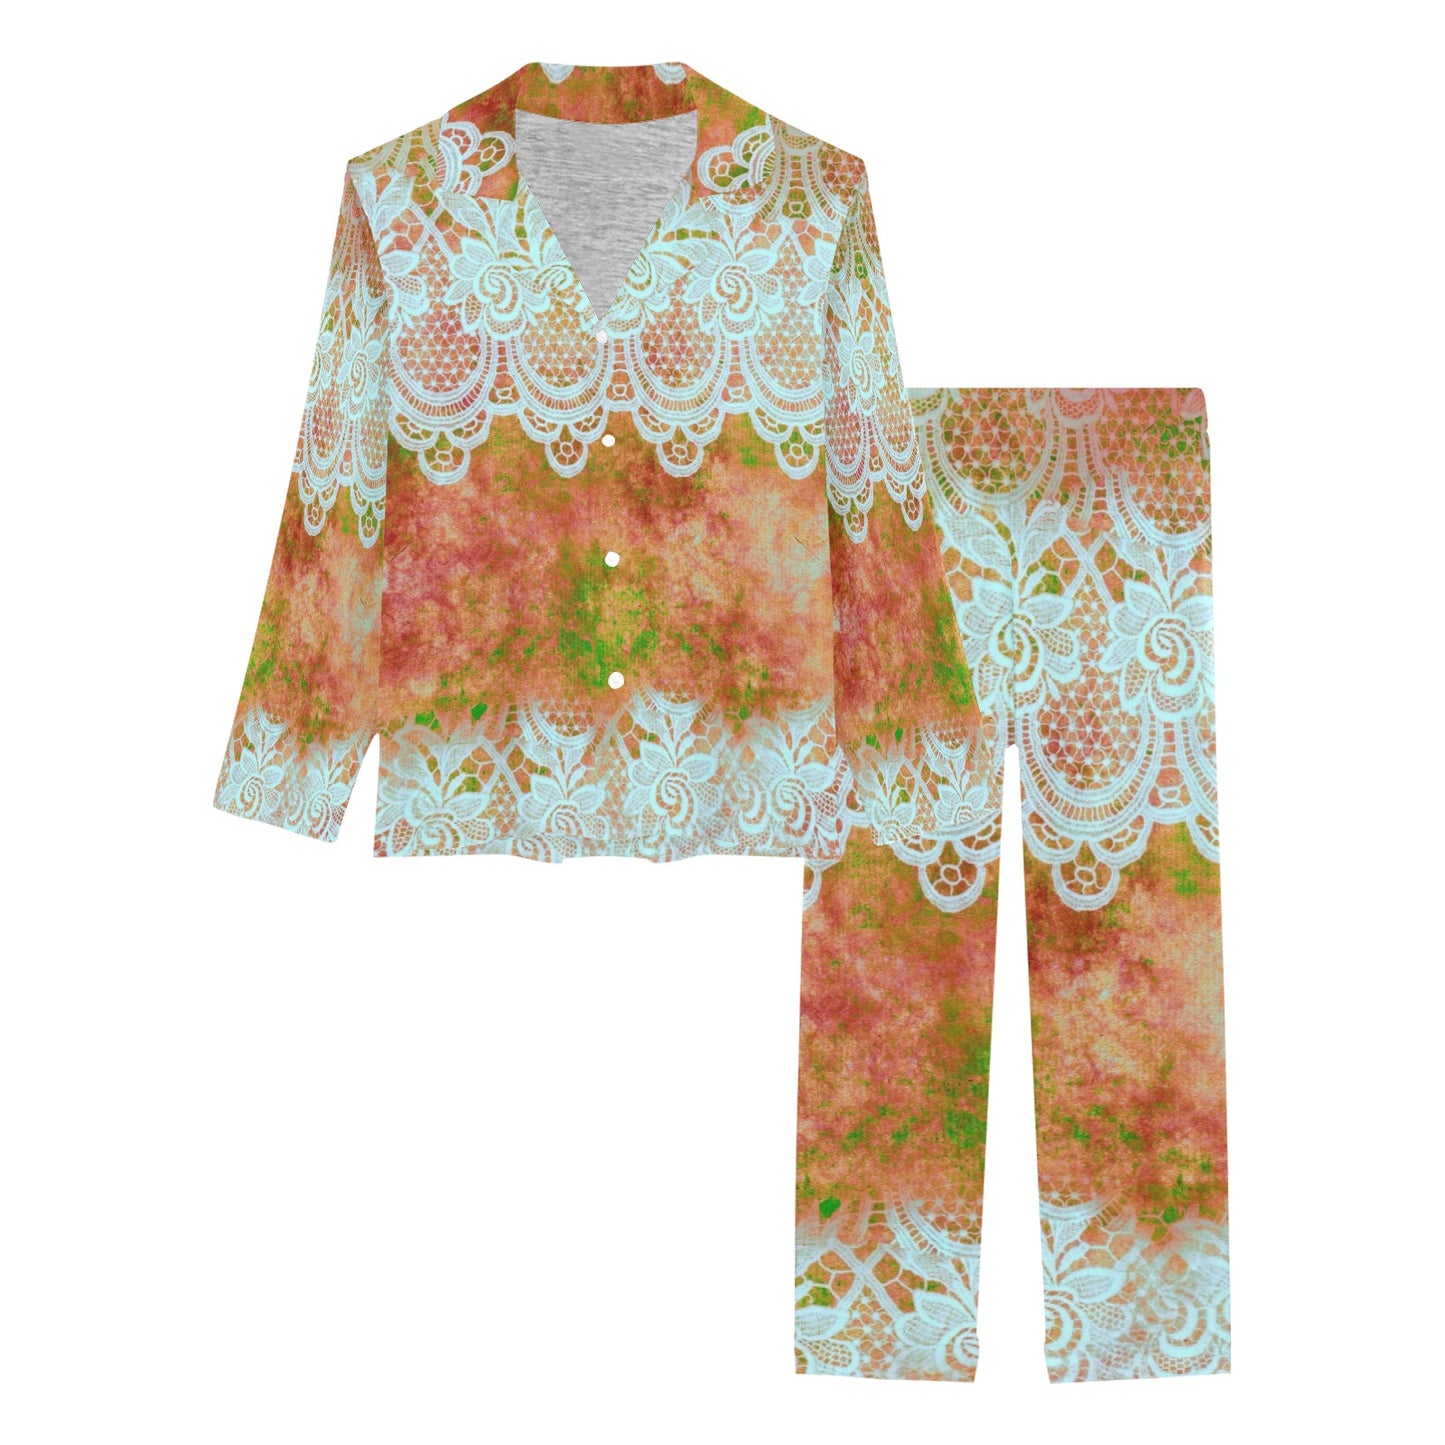 Victorian printed lace pajama set, design 31 Women's Long Pajama Set (Sets 02)